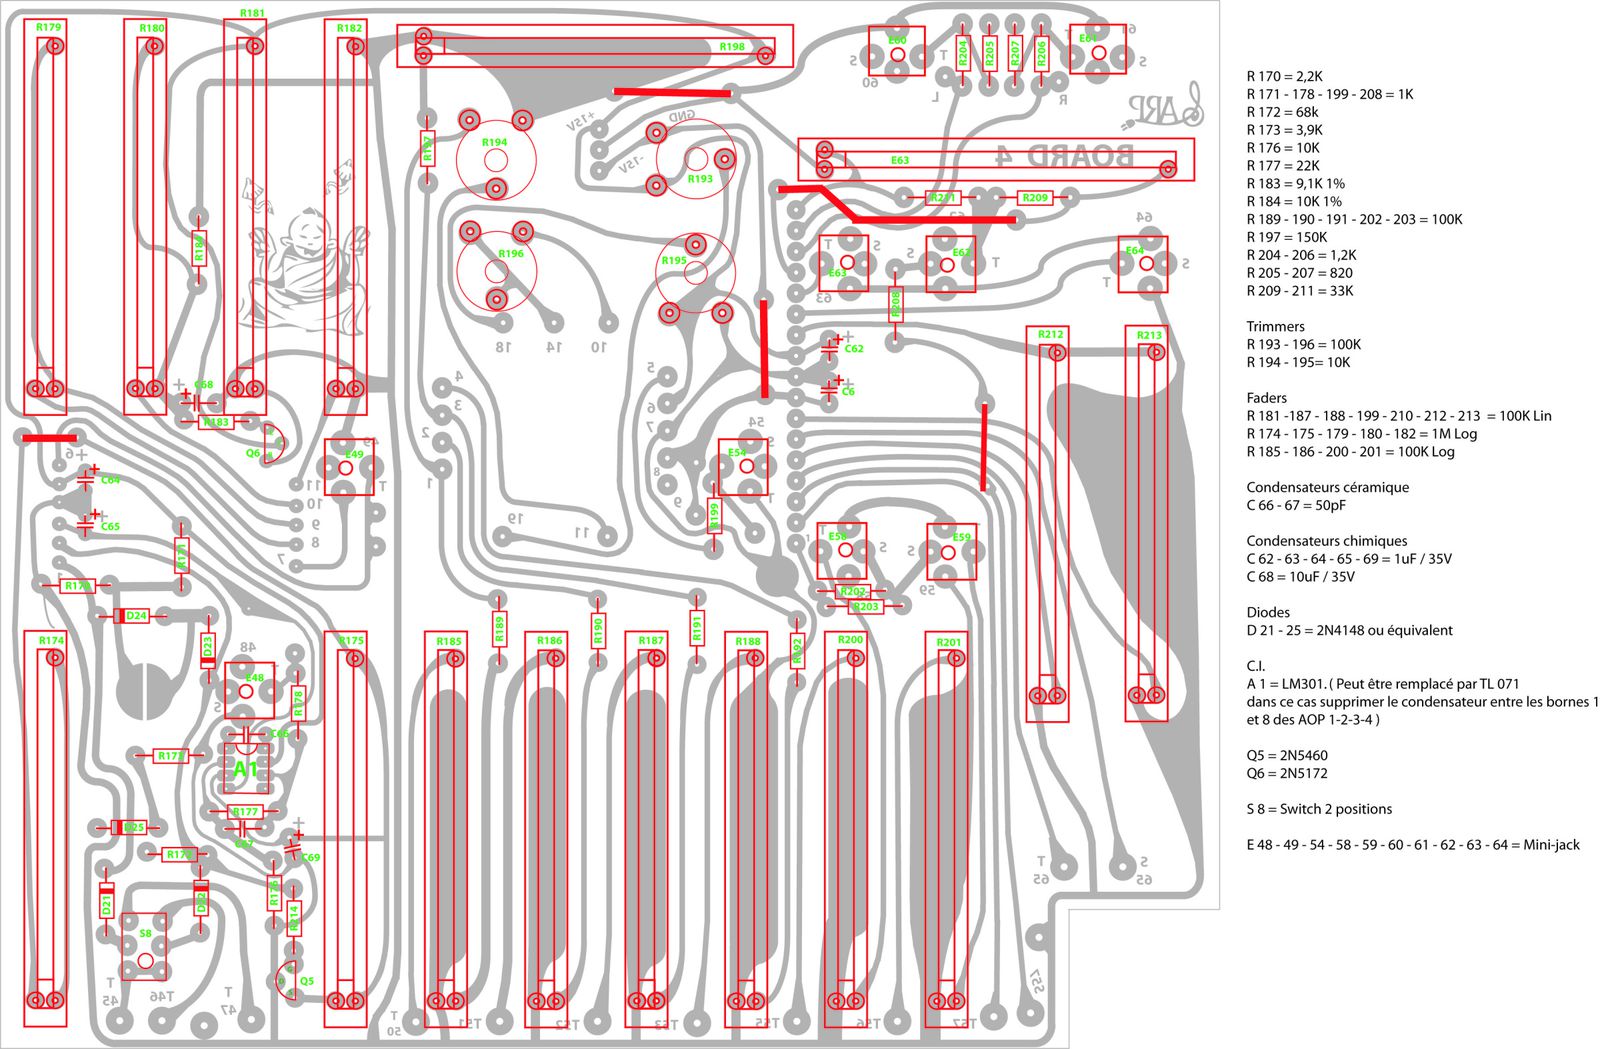 Board-4-CI-cote-composants.jpg